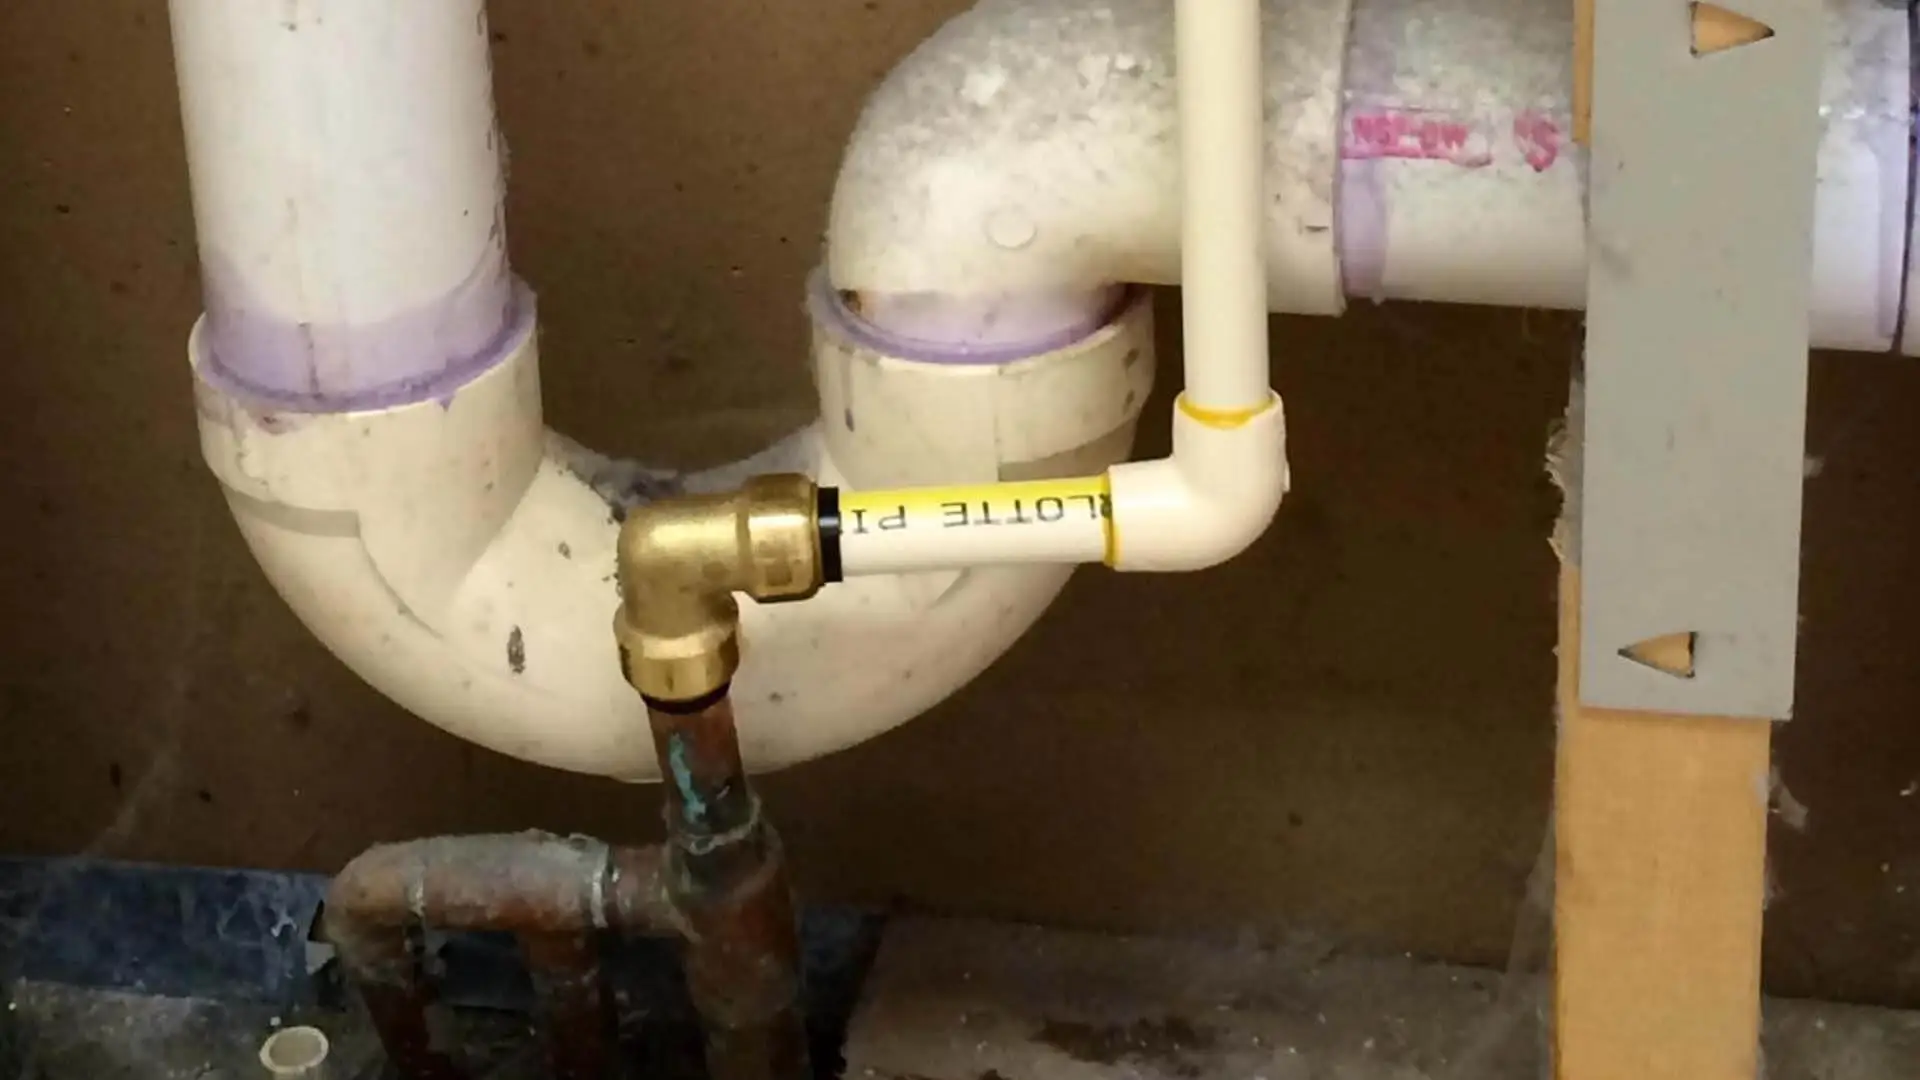 24 hour emergency plumbing services, leaking pipe repair in Lakeland, Davenport, Plant City, Winter Haven and Zephyrhills FL.